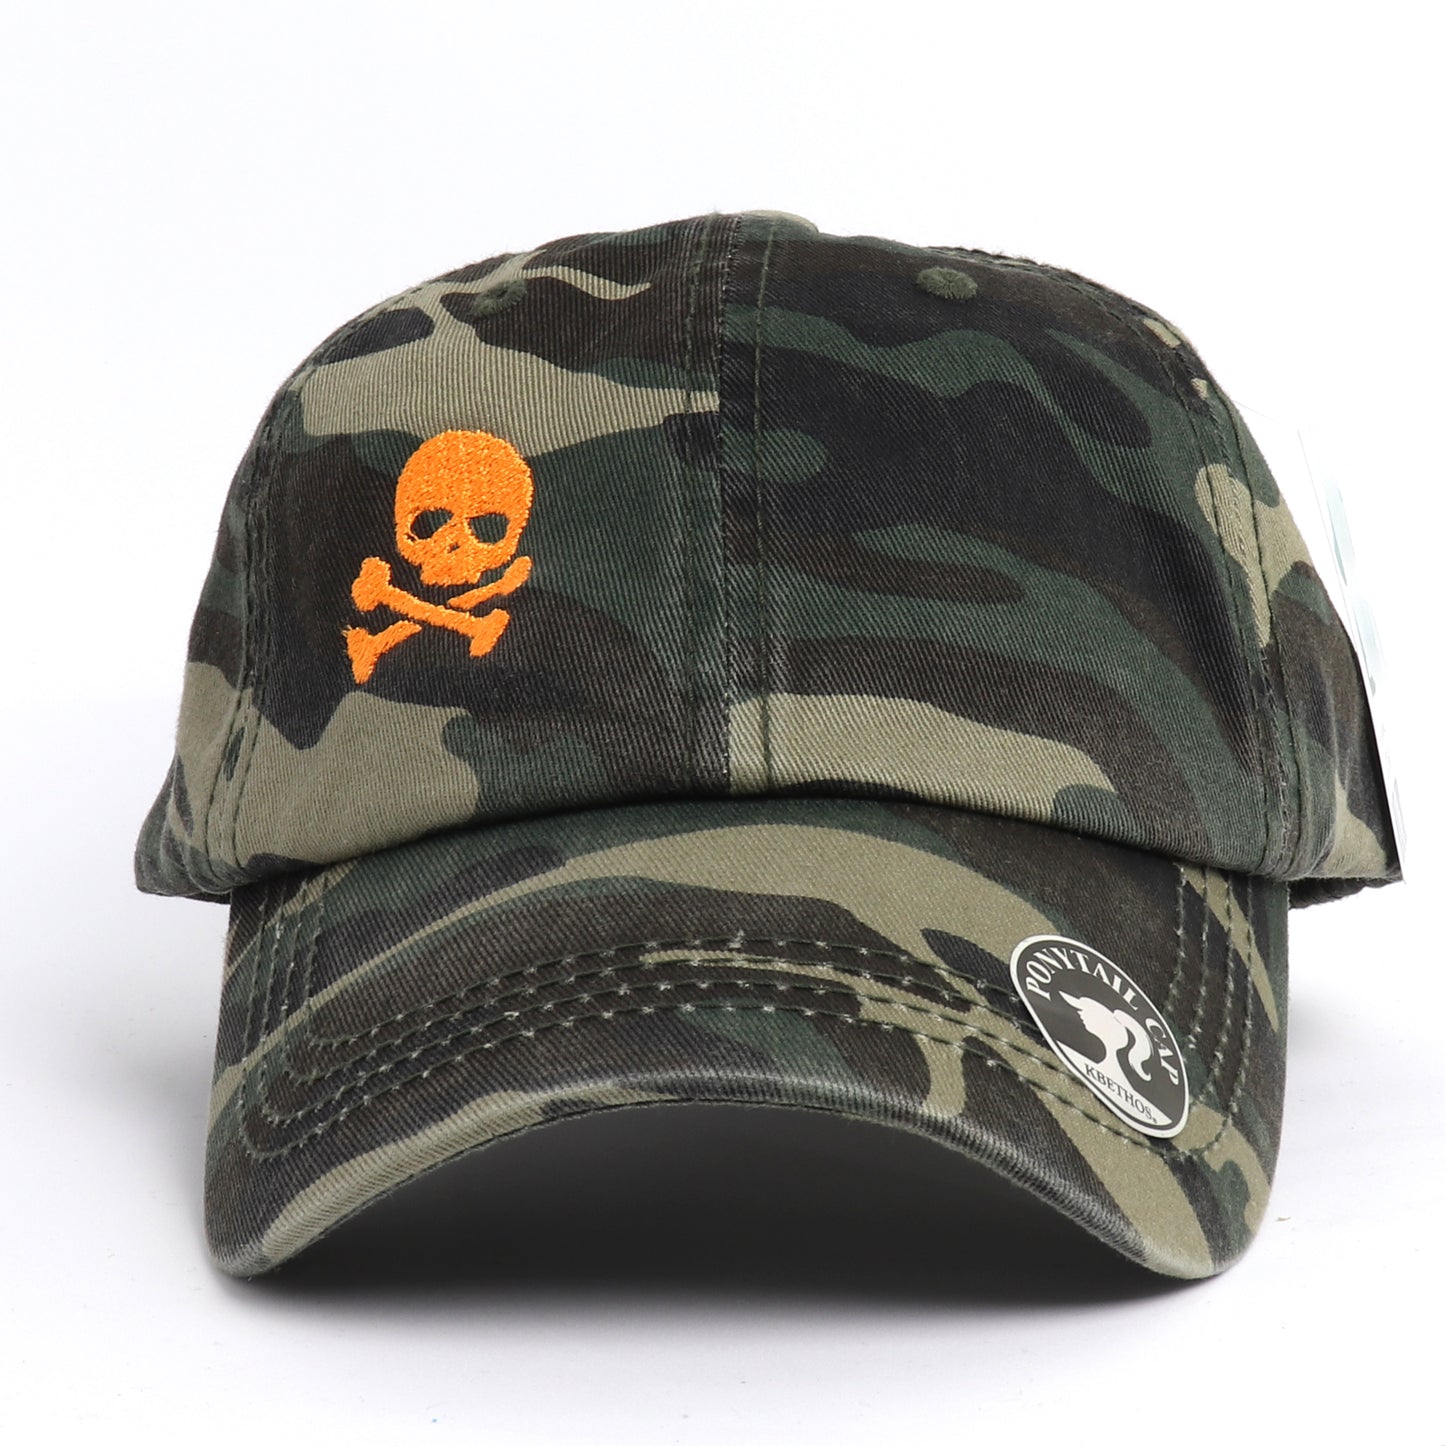 Skull & Crossbones Classic Camouflage Ponytail Hat